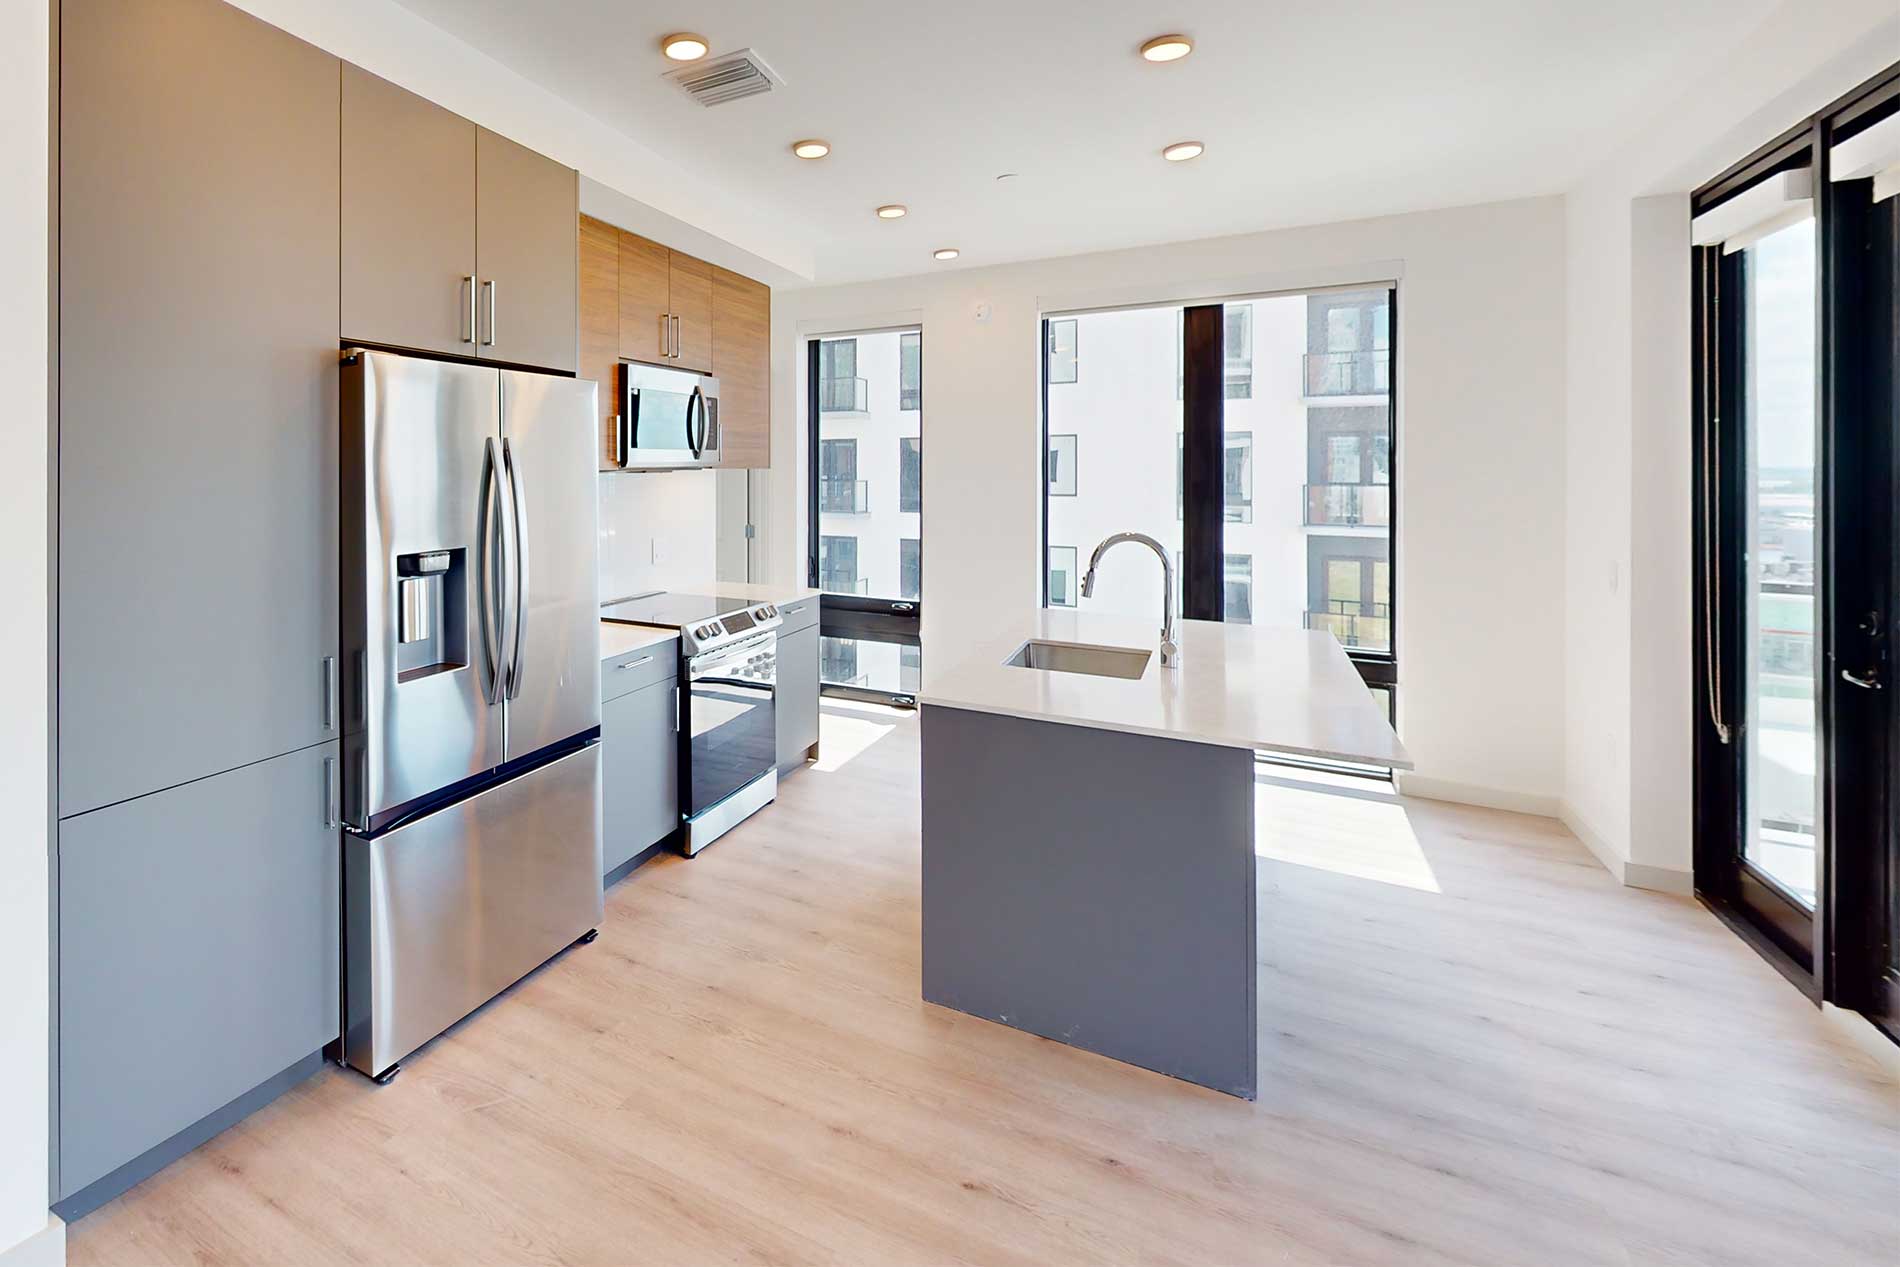 101 N Meridian apartment kitchen